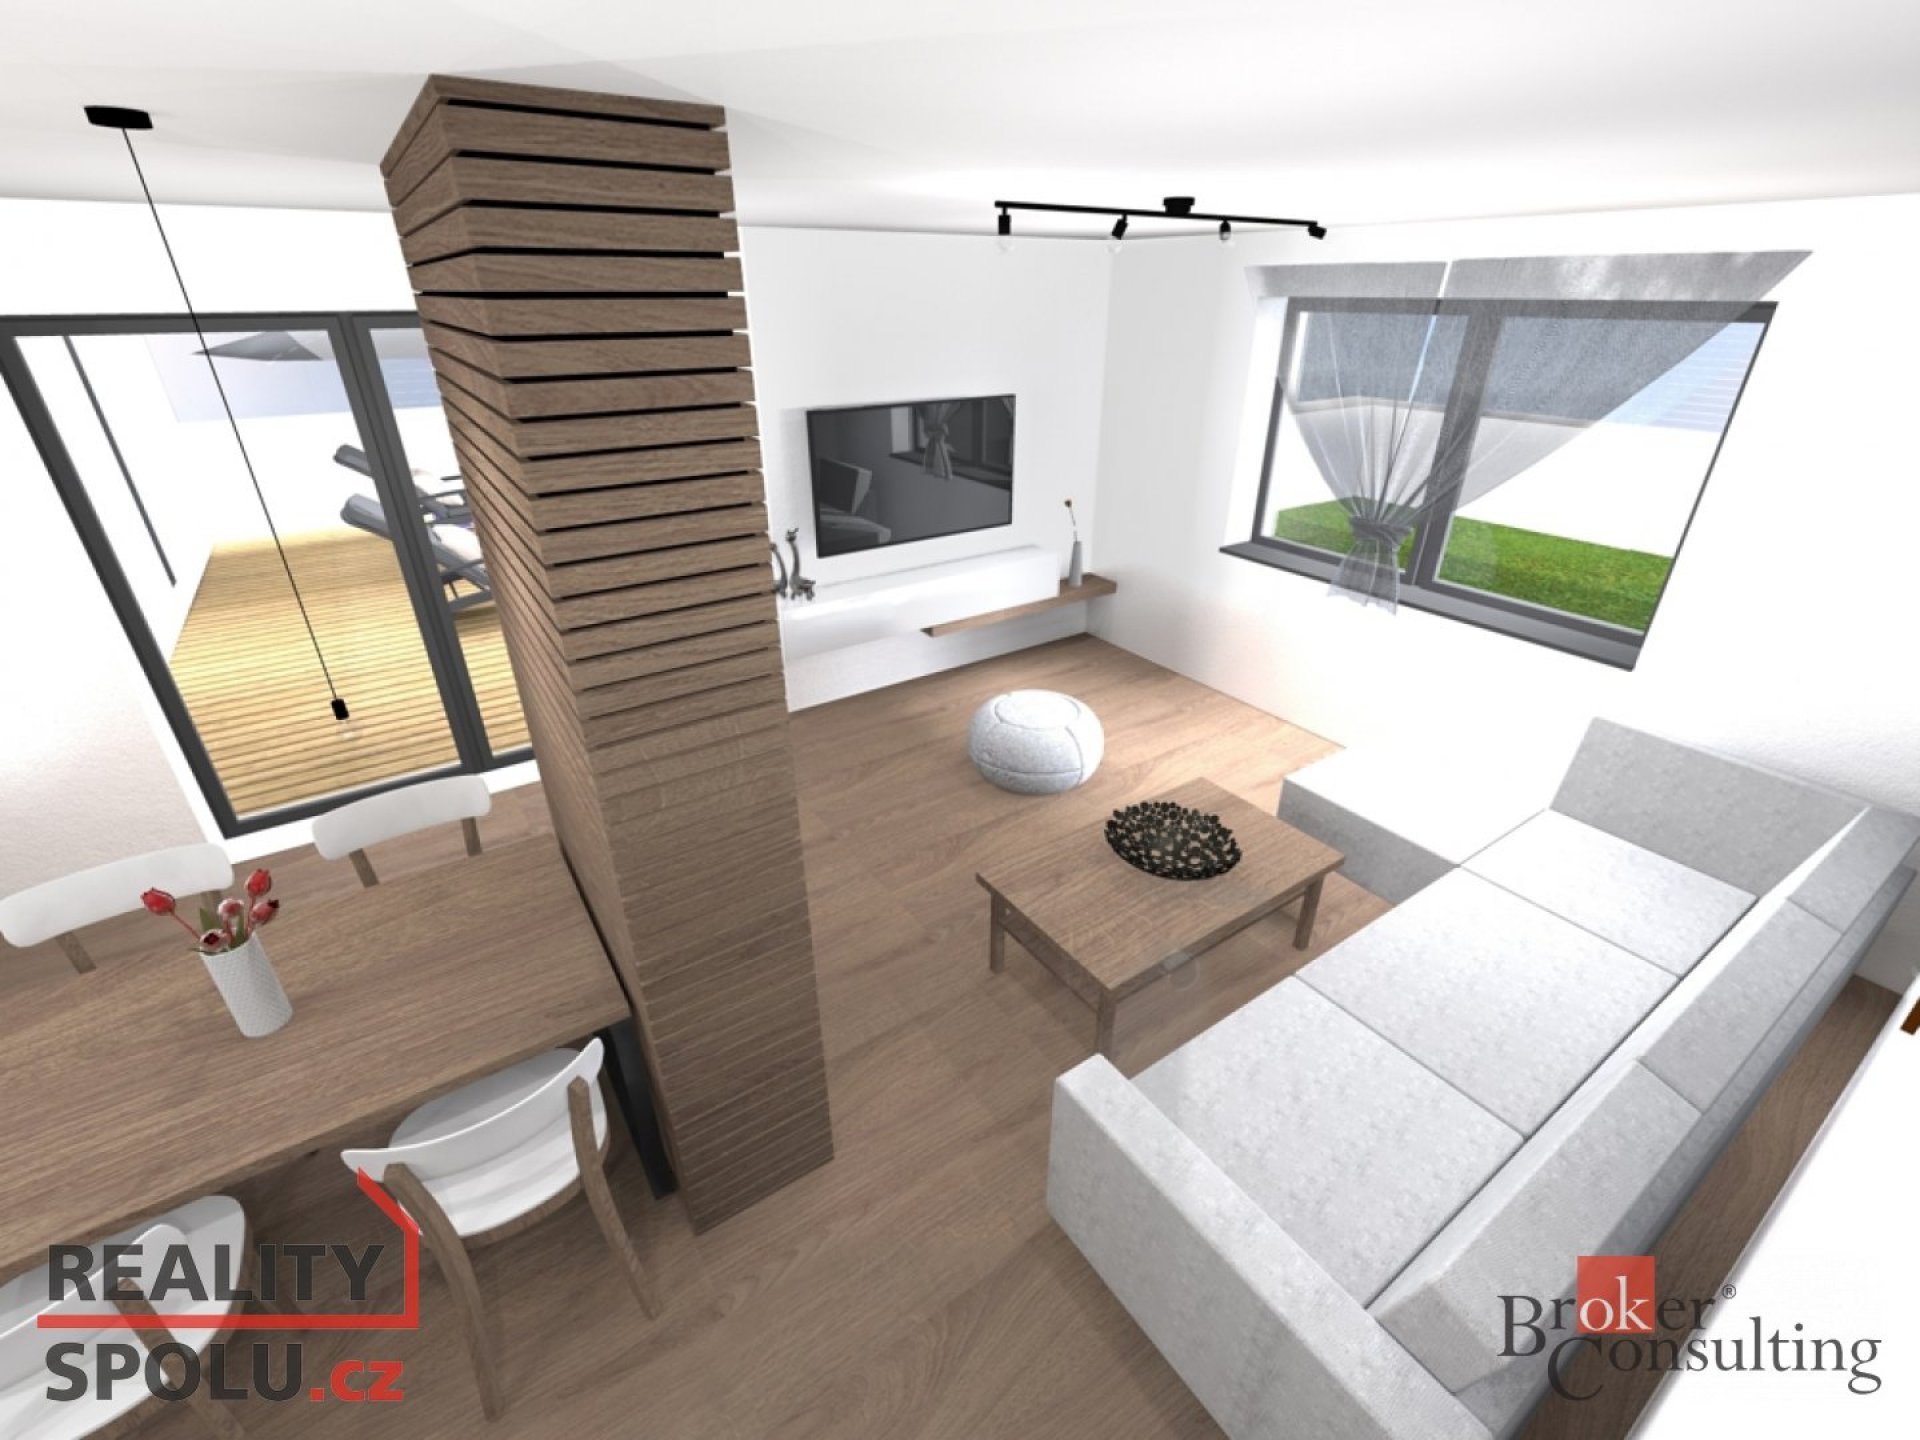 Prodej novostavby velkometrážního terasového bytu, o dispozici 4+kk ( 119 m2 + 96 m2 terasa), v Pelh